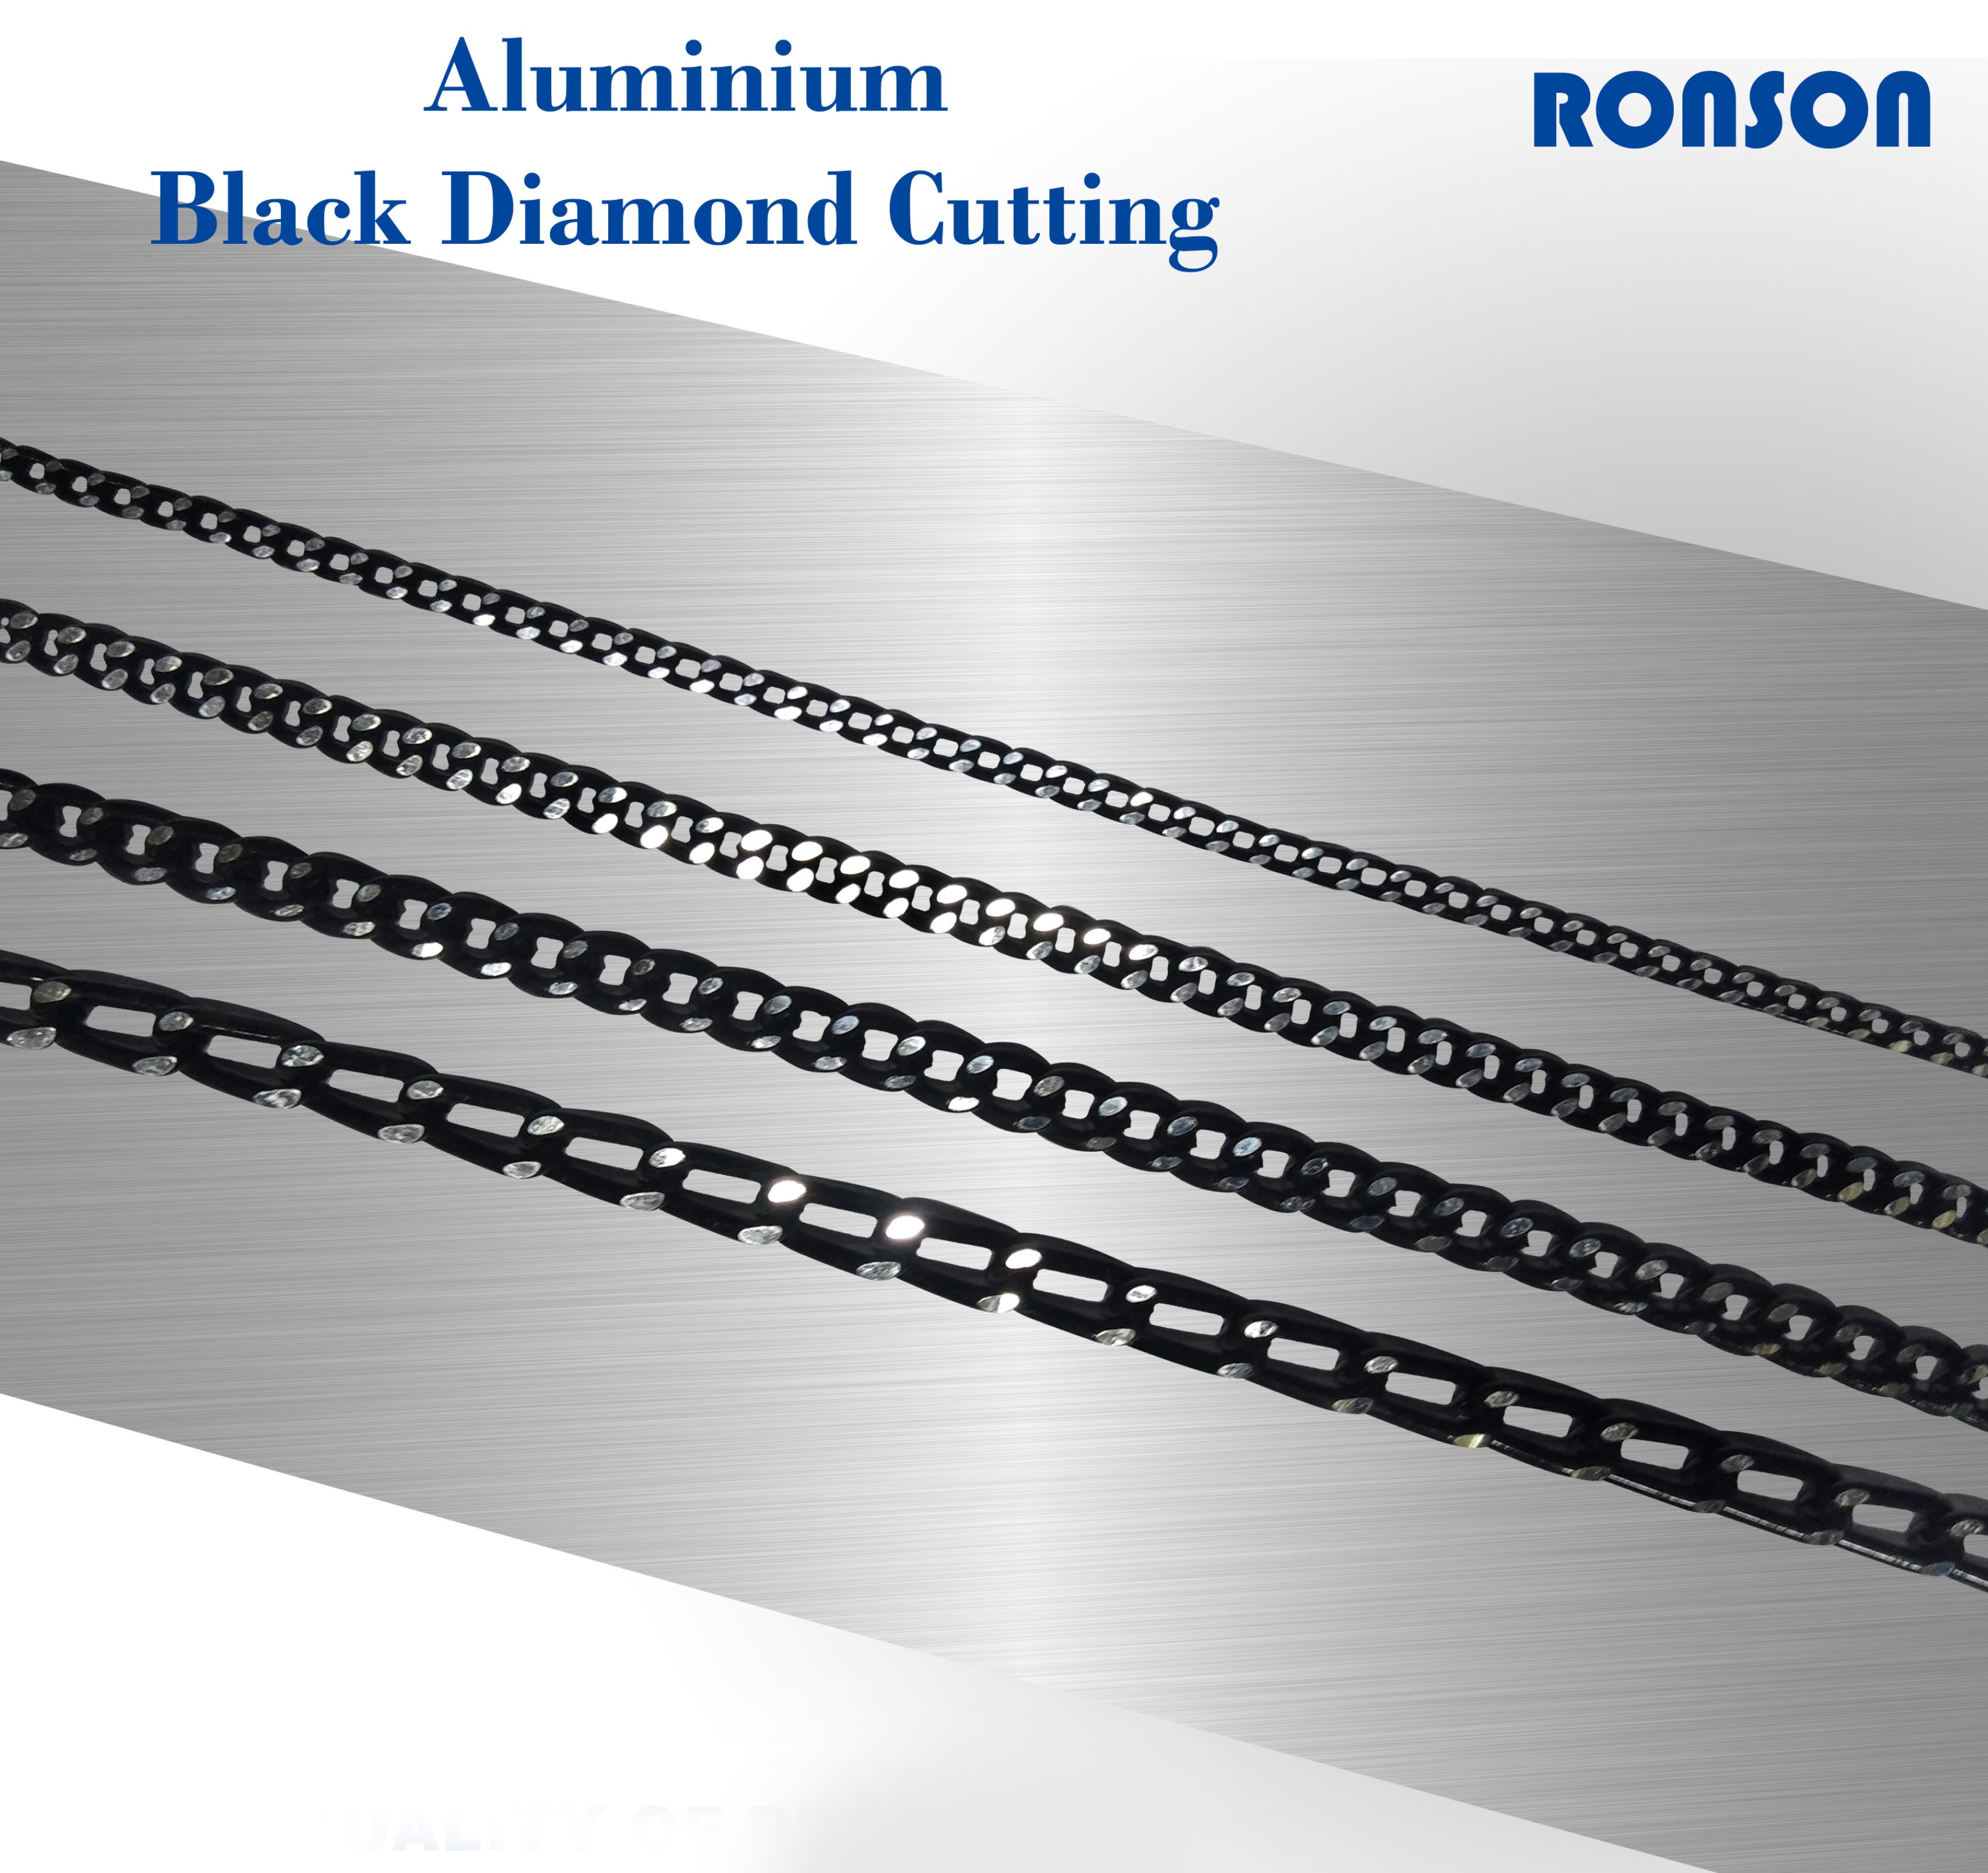 Black Diamond Cutting Aluminium Chain